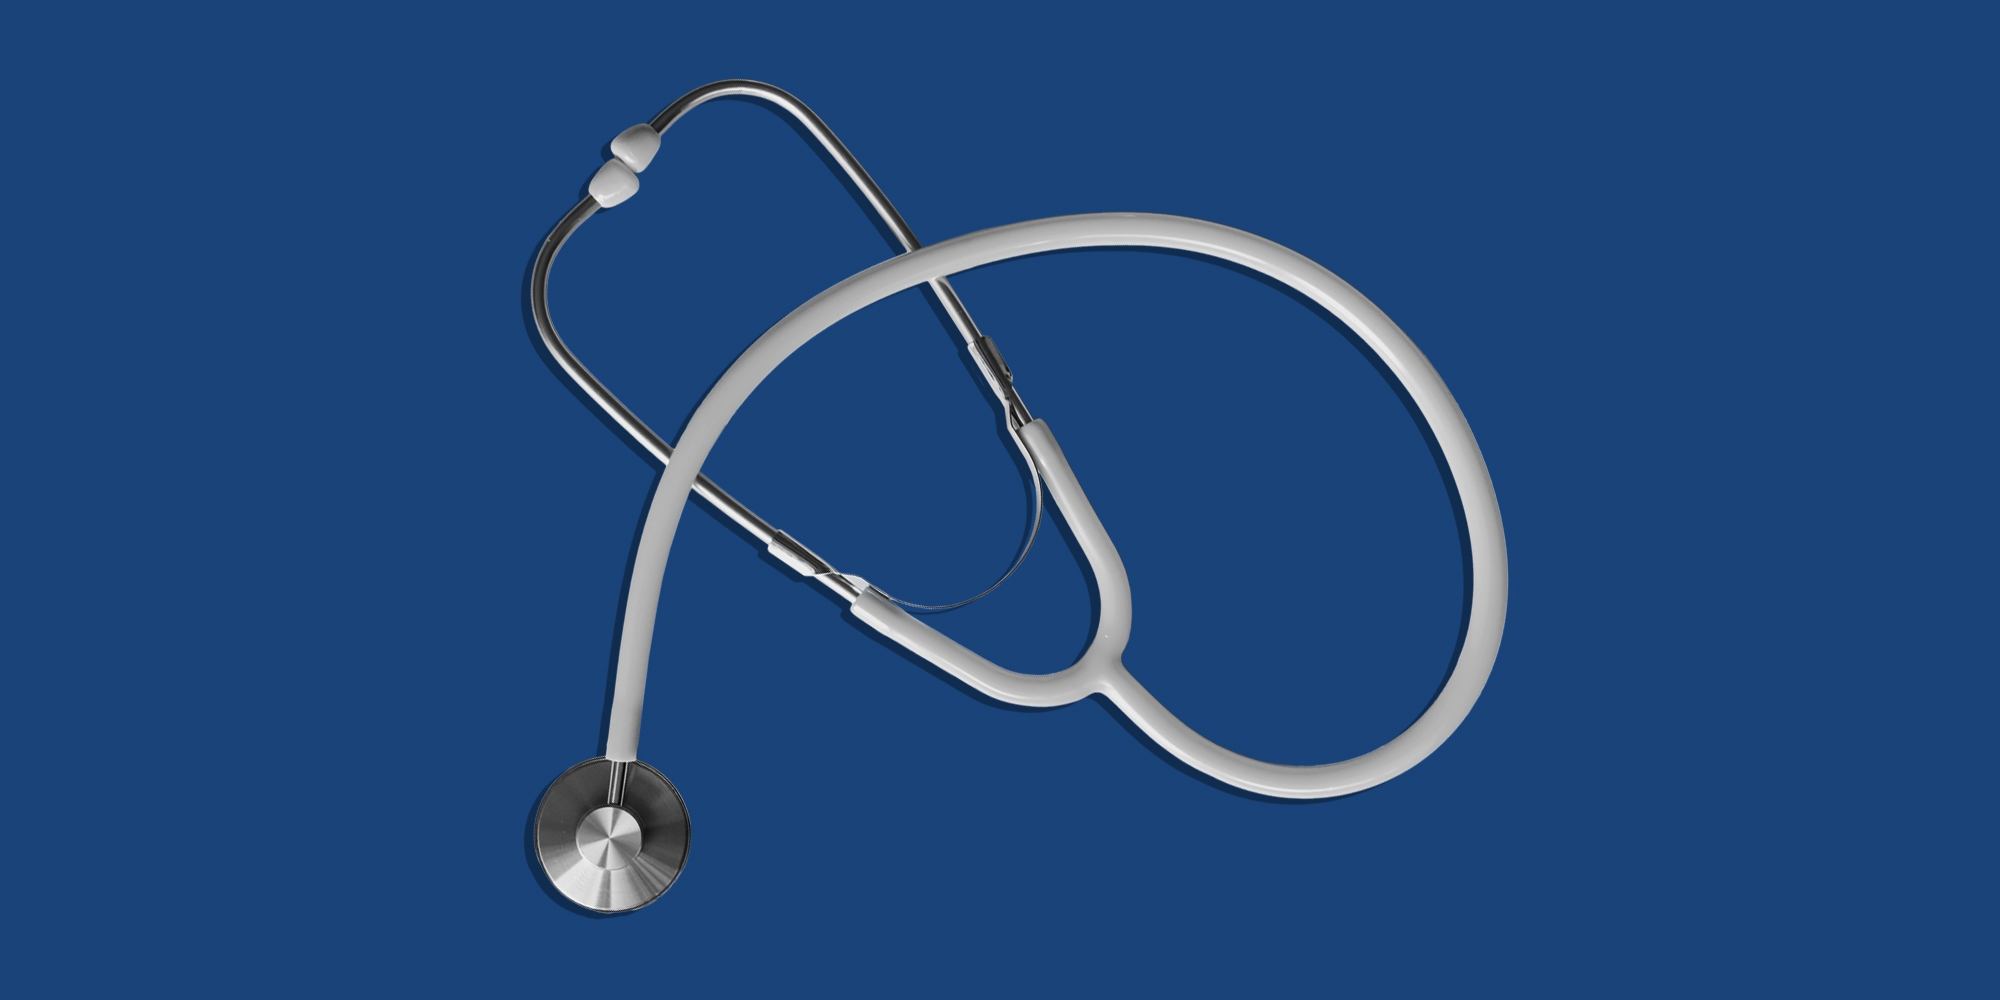 Stethoscope on a blue background. Prescription pill addiction